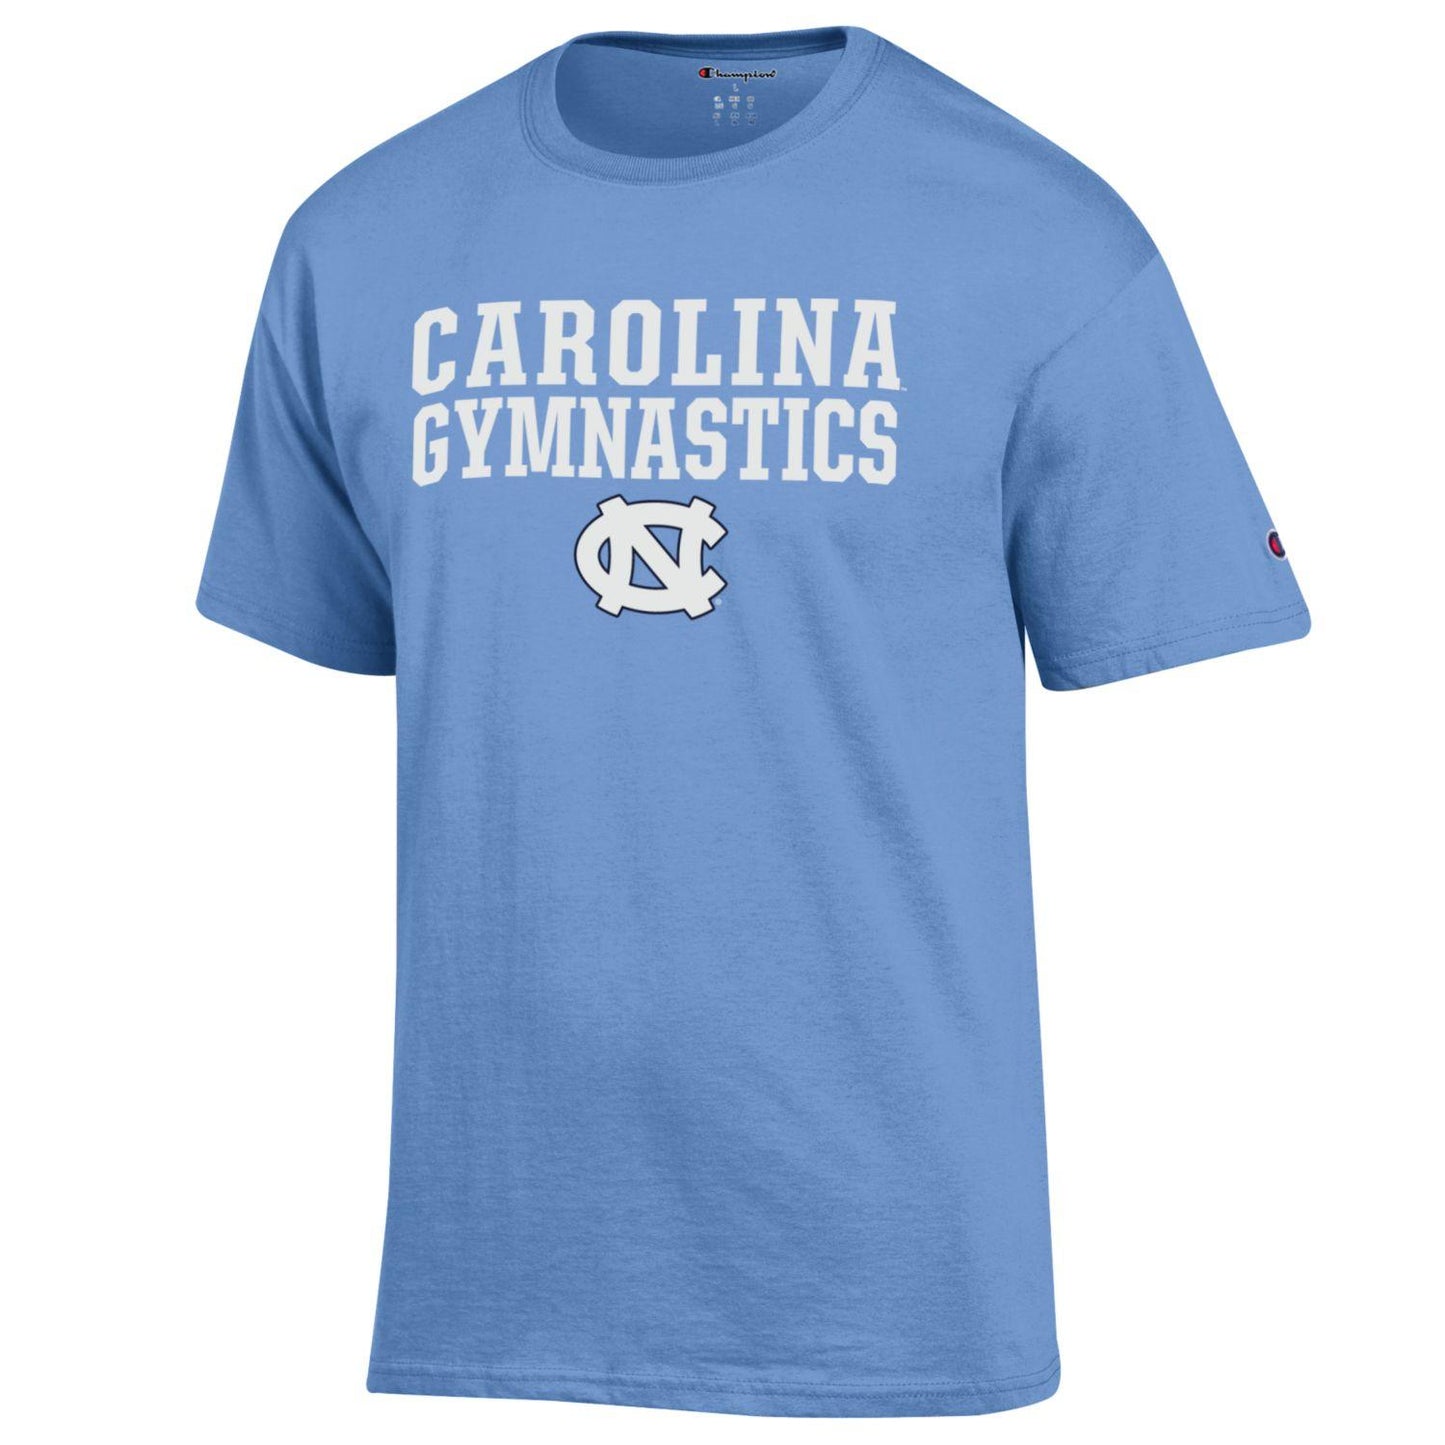 Carolina Gymnastics T-Shirt with UNC Logo by Champion